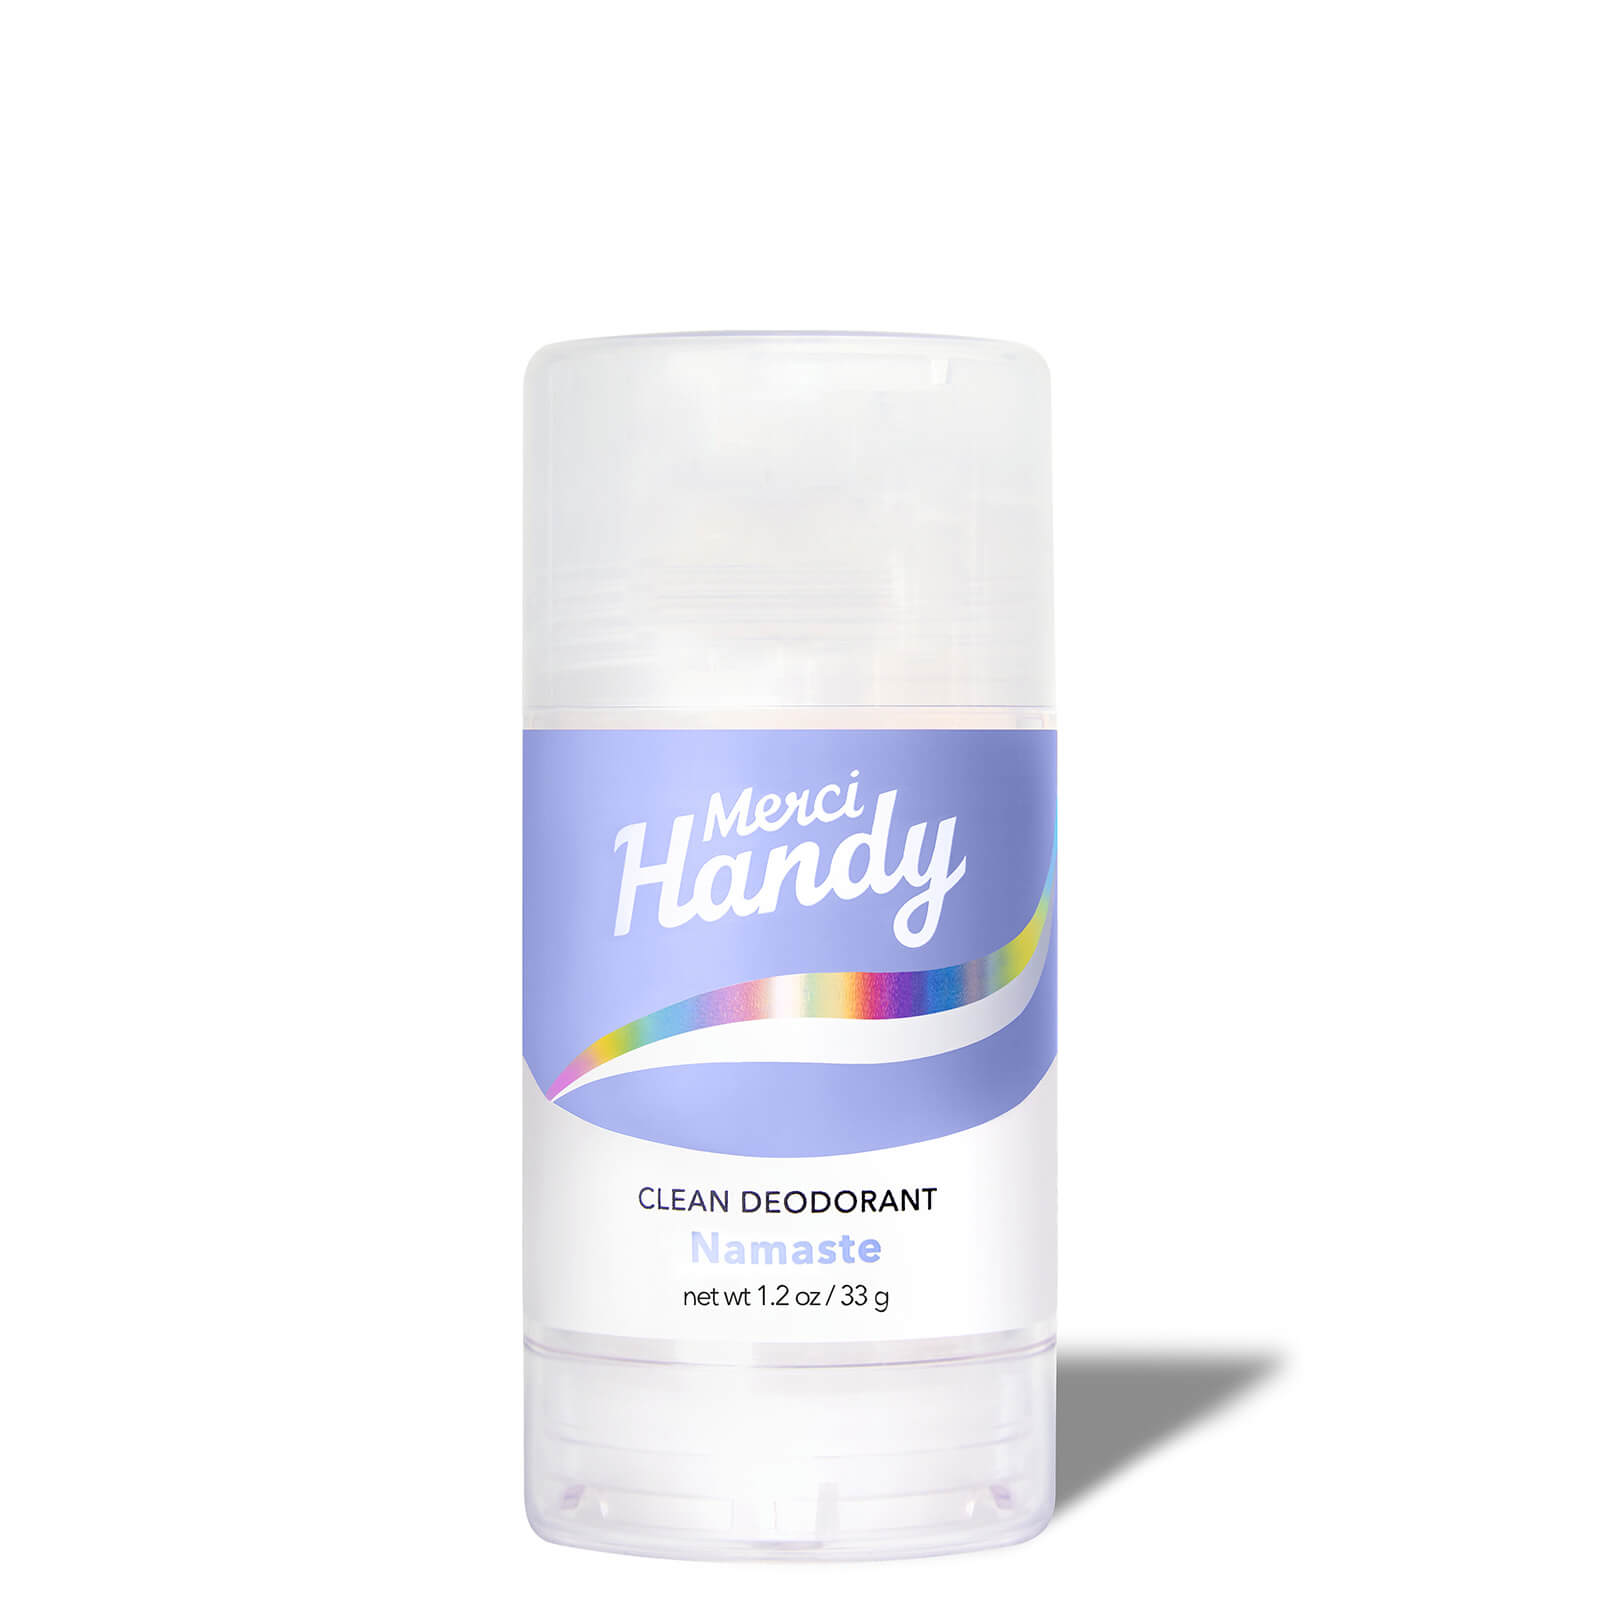 Merci Handy Clean Deodorant 33g (Various Fragrance) - Namaste